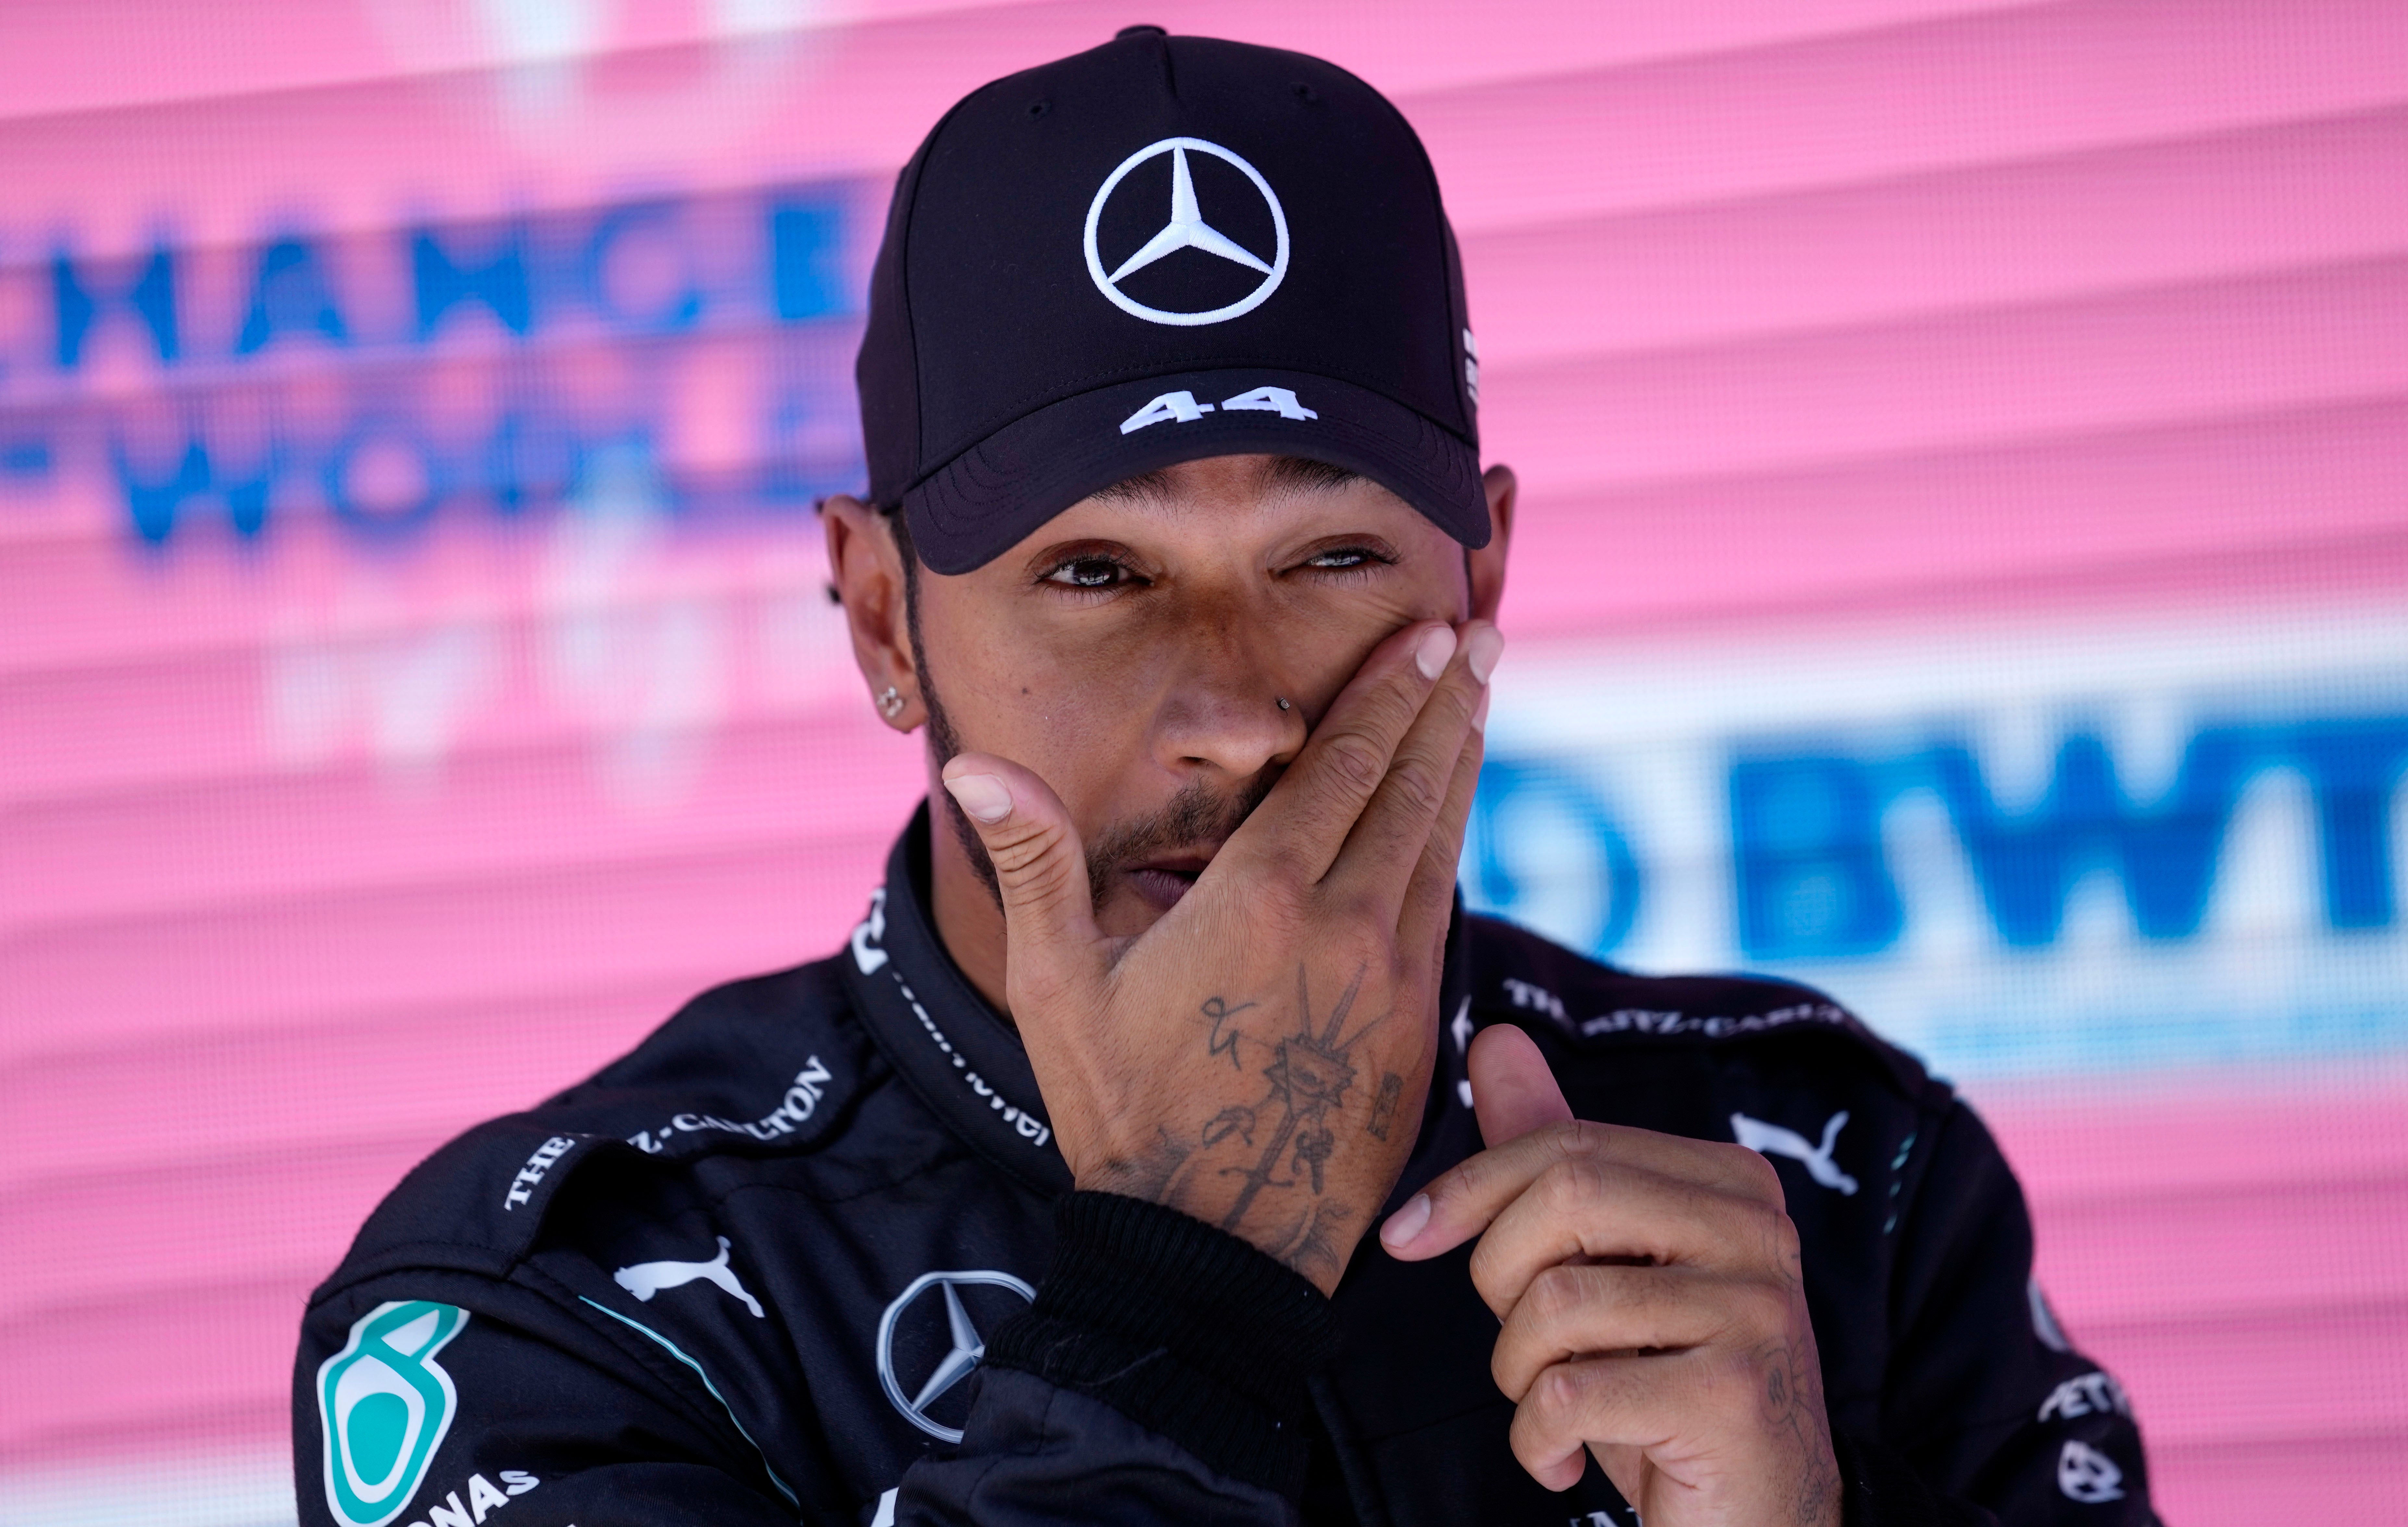 Lewis Hamilton was third quickest in qualifying